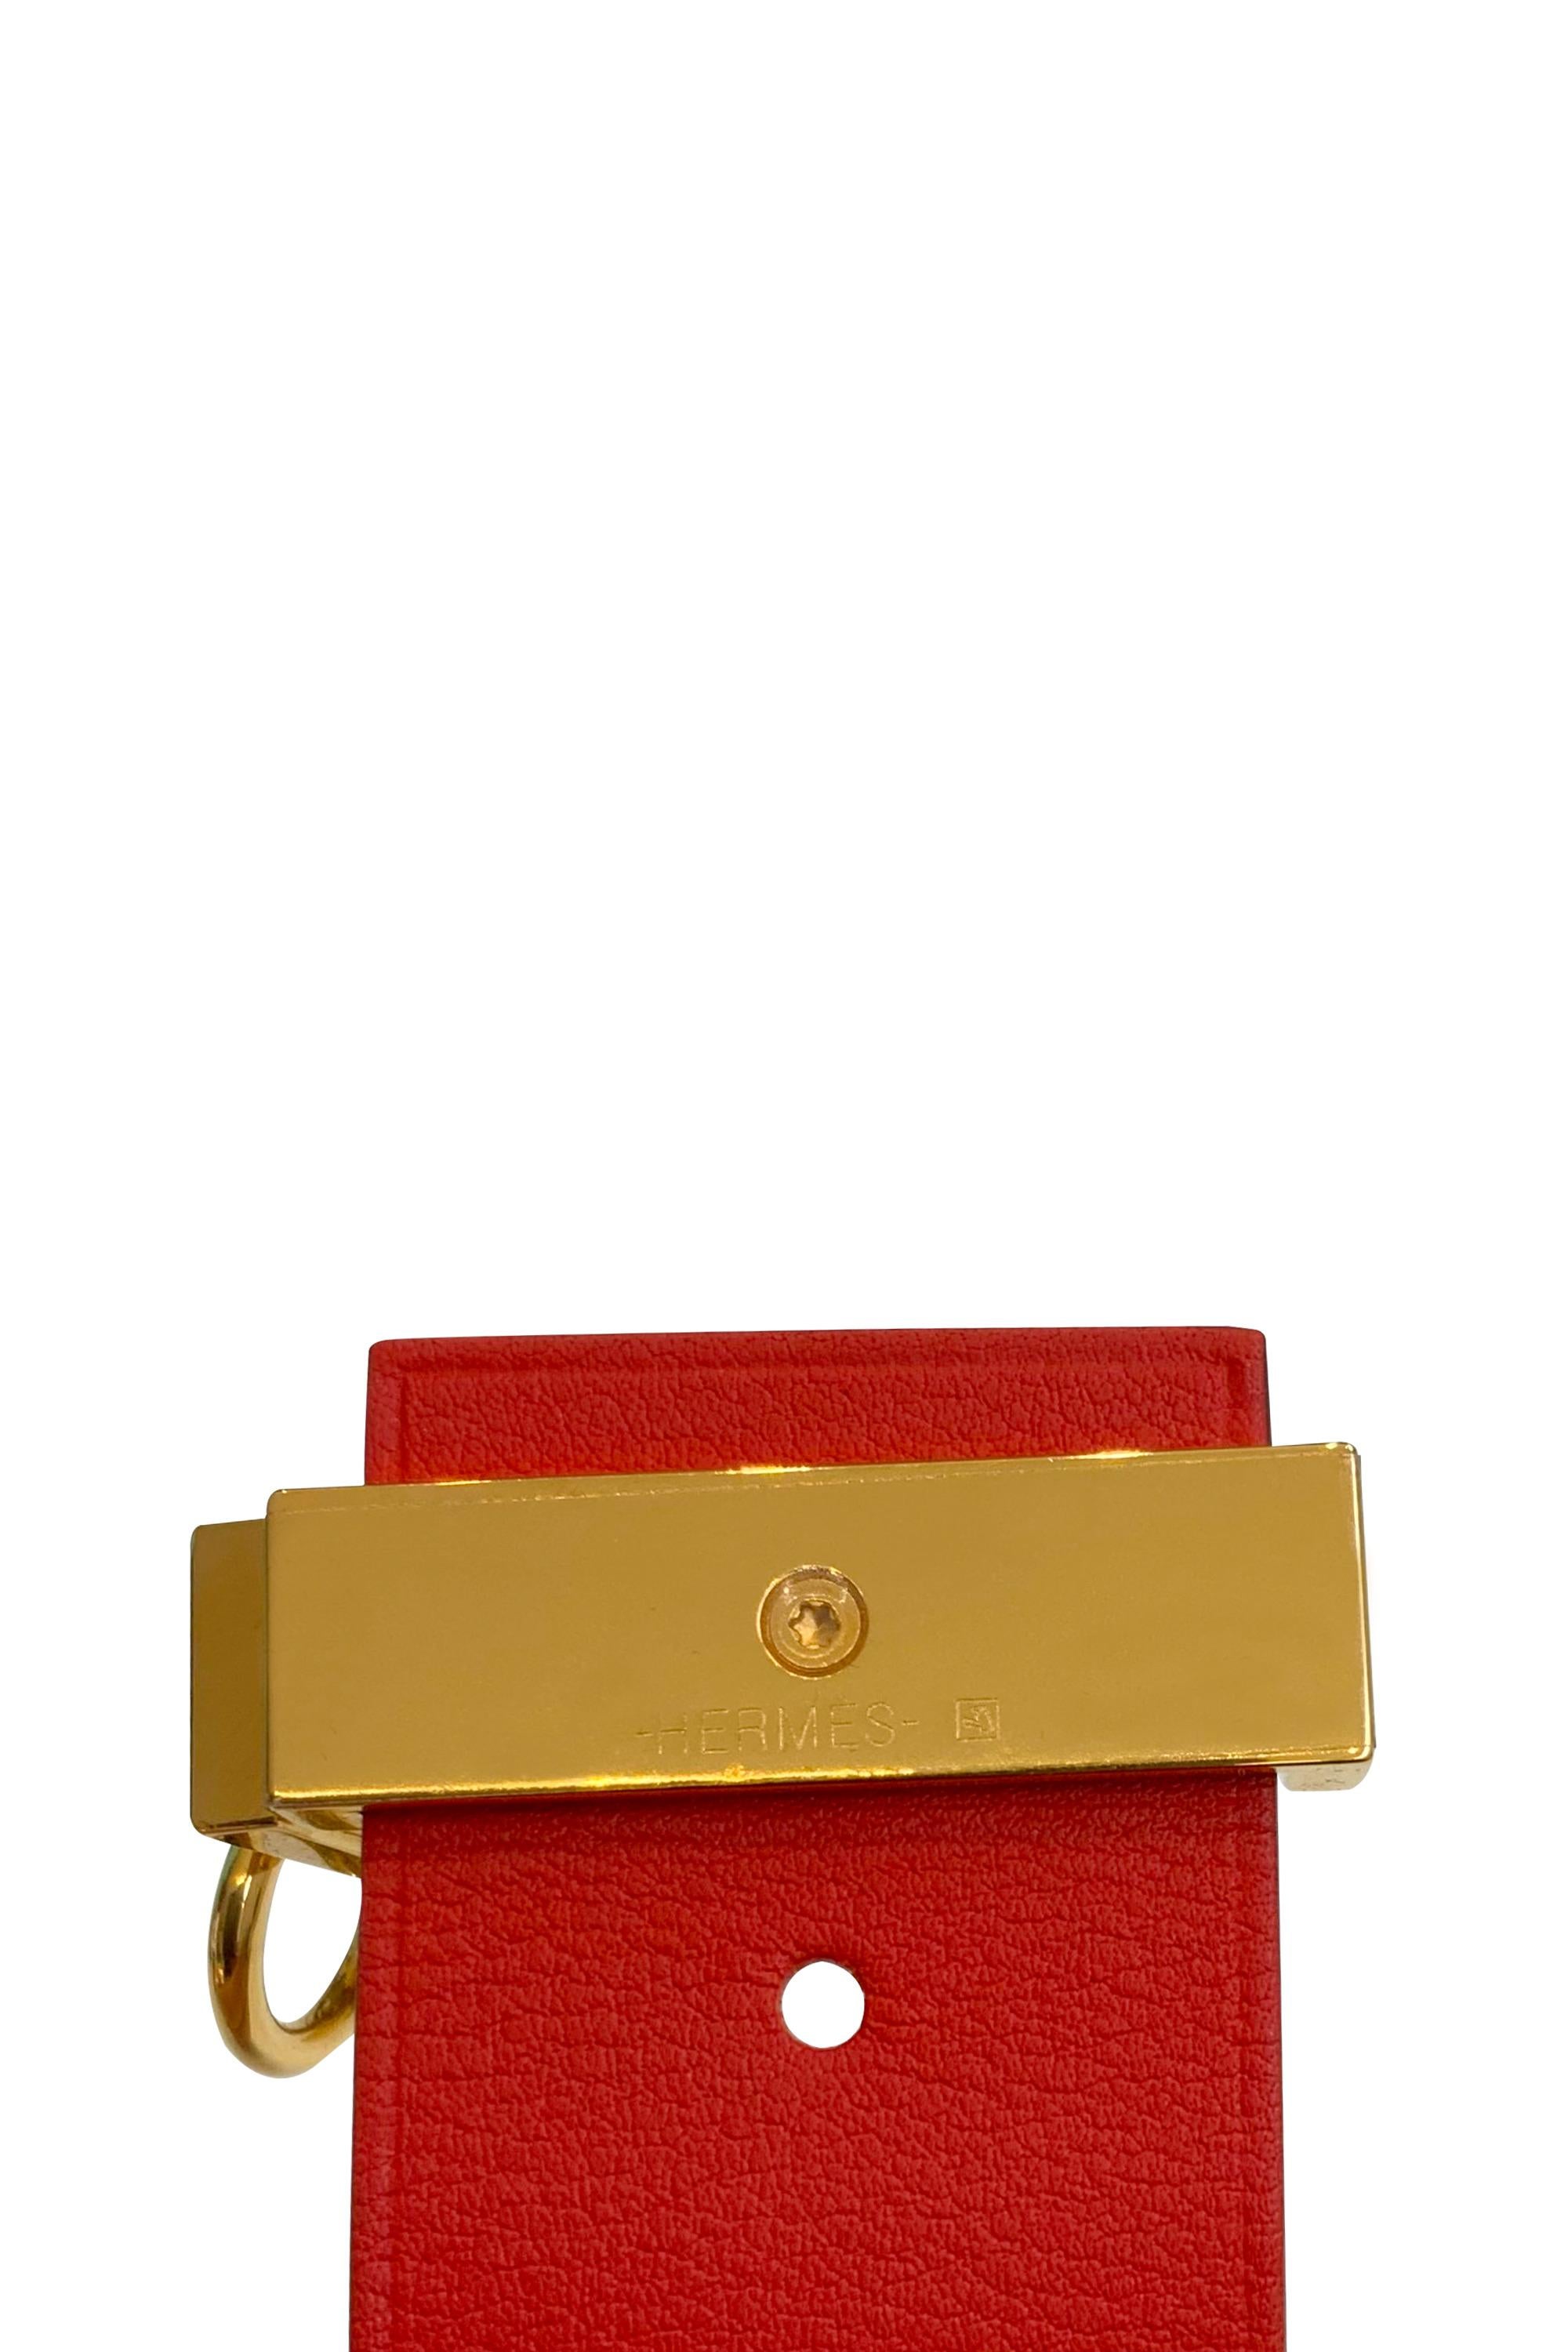 Hermès Bicolour Illusion Reversible Bracelet Capucine Red/White GHW For Sale 4